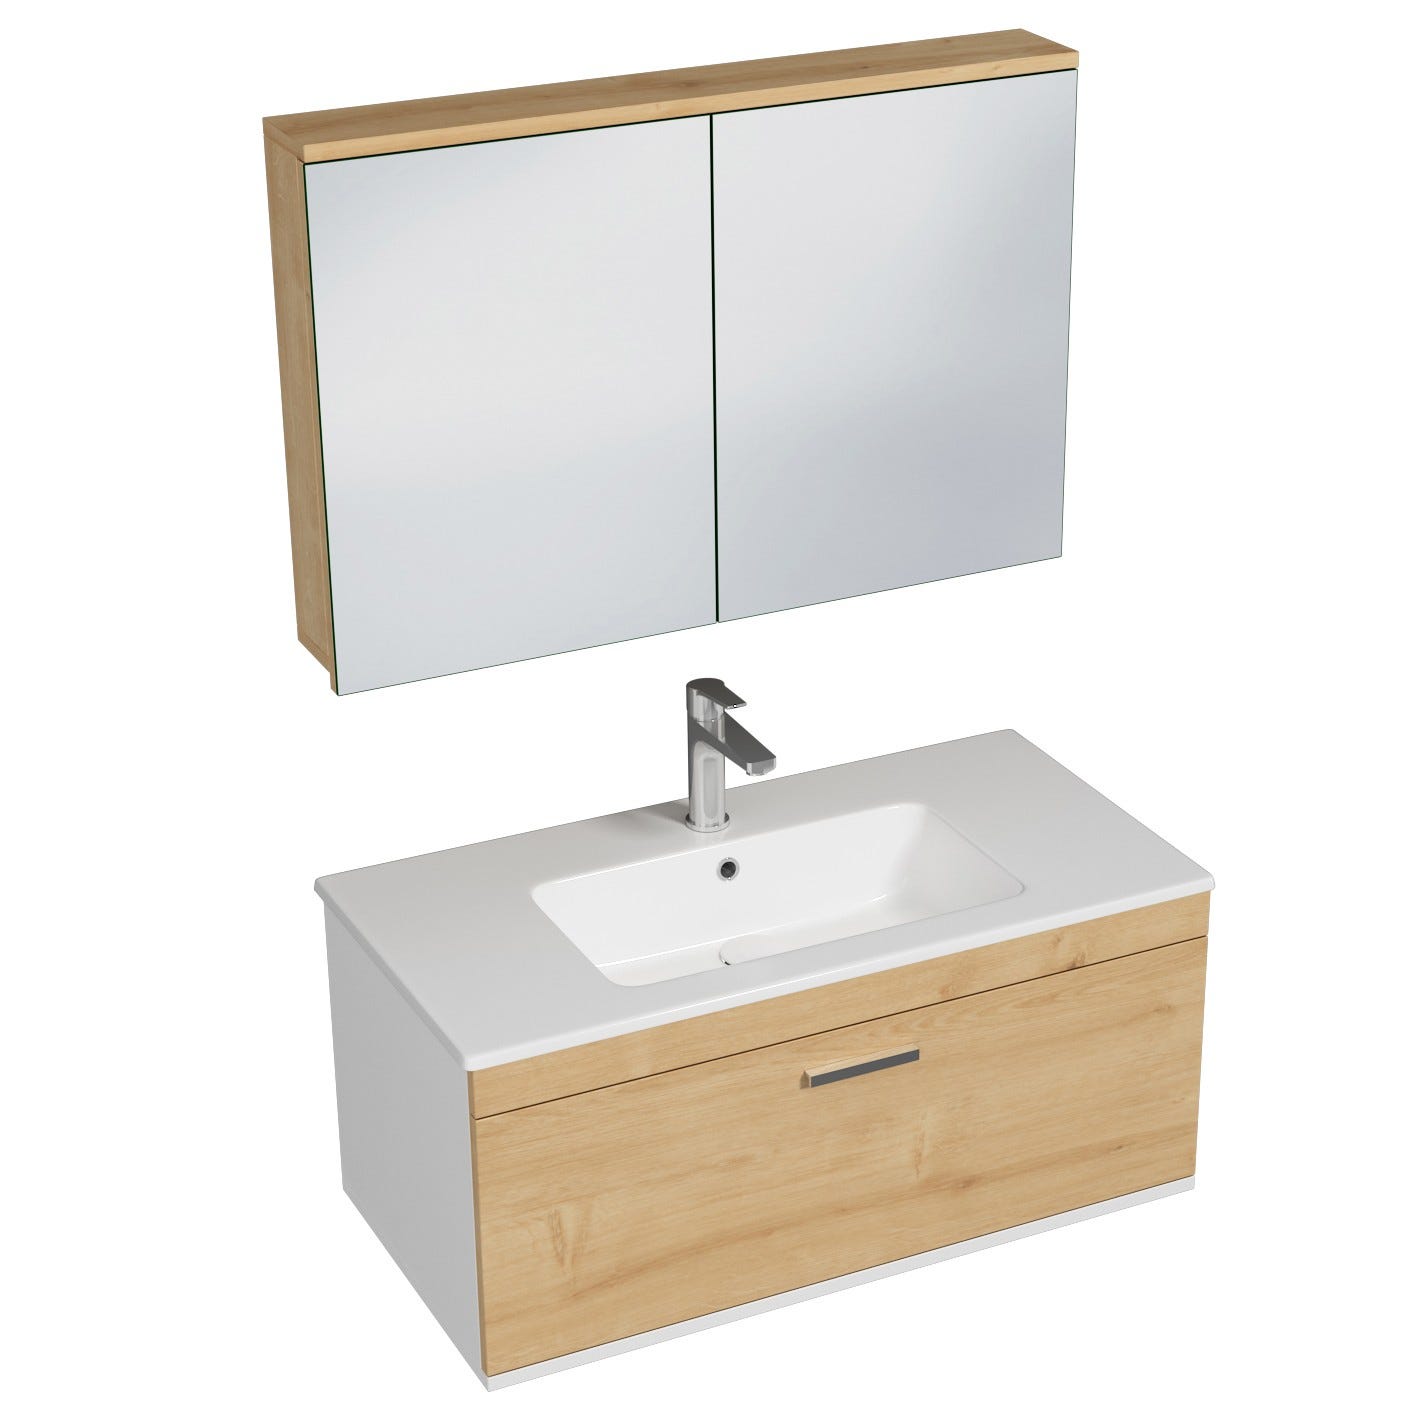 RUBITE Meuble salle de bain simple vasque 1 tiroir chêne clair largeur 90 cm + miroir armoire 0